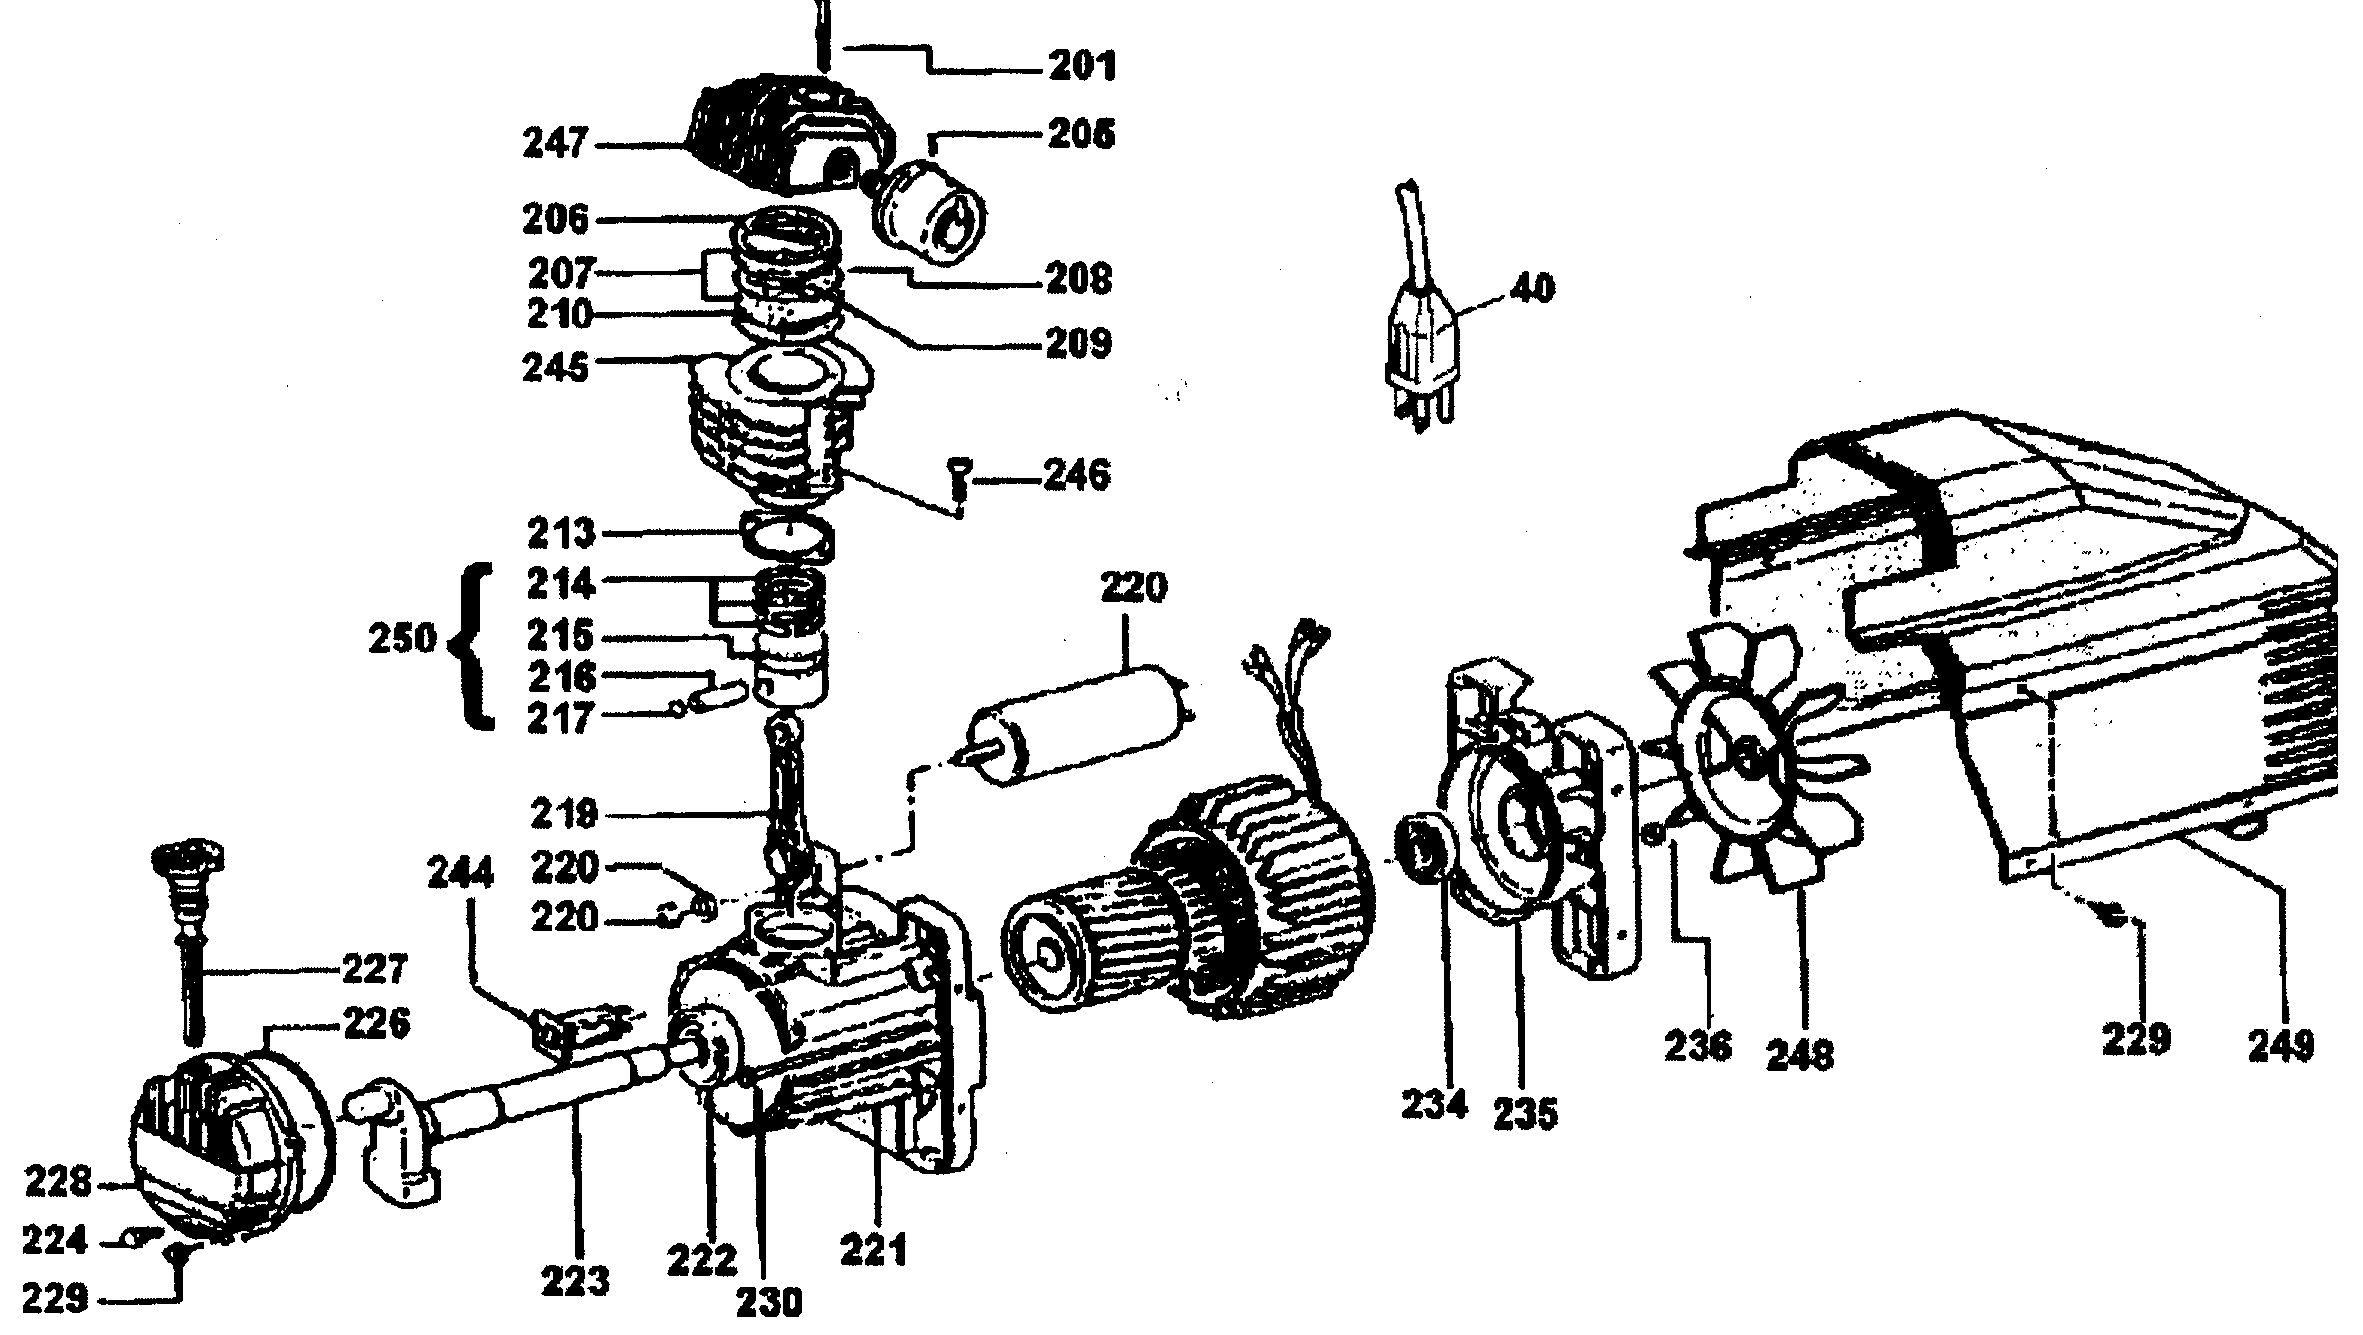 Wiring Diagram For Air Compressor Motor Diagram Resource Gallery